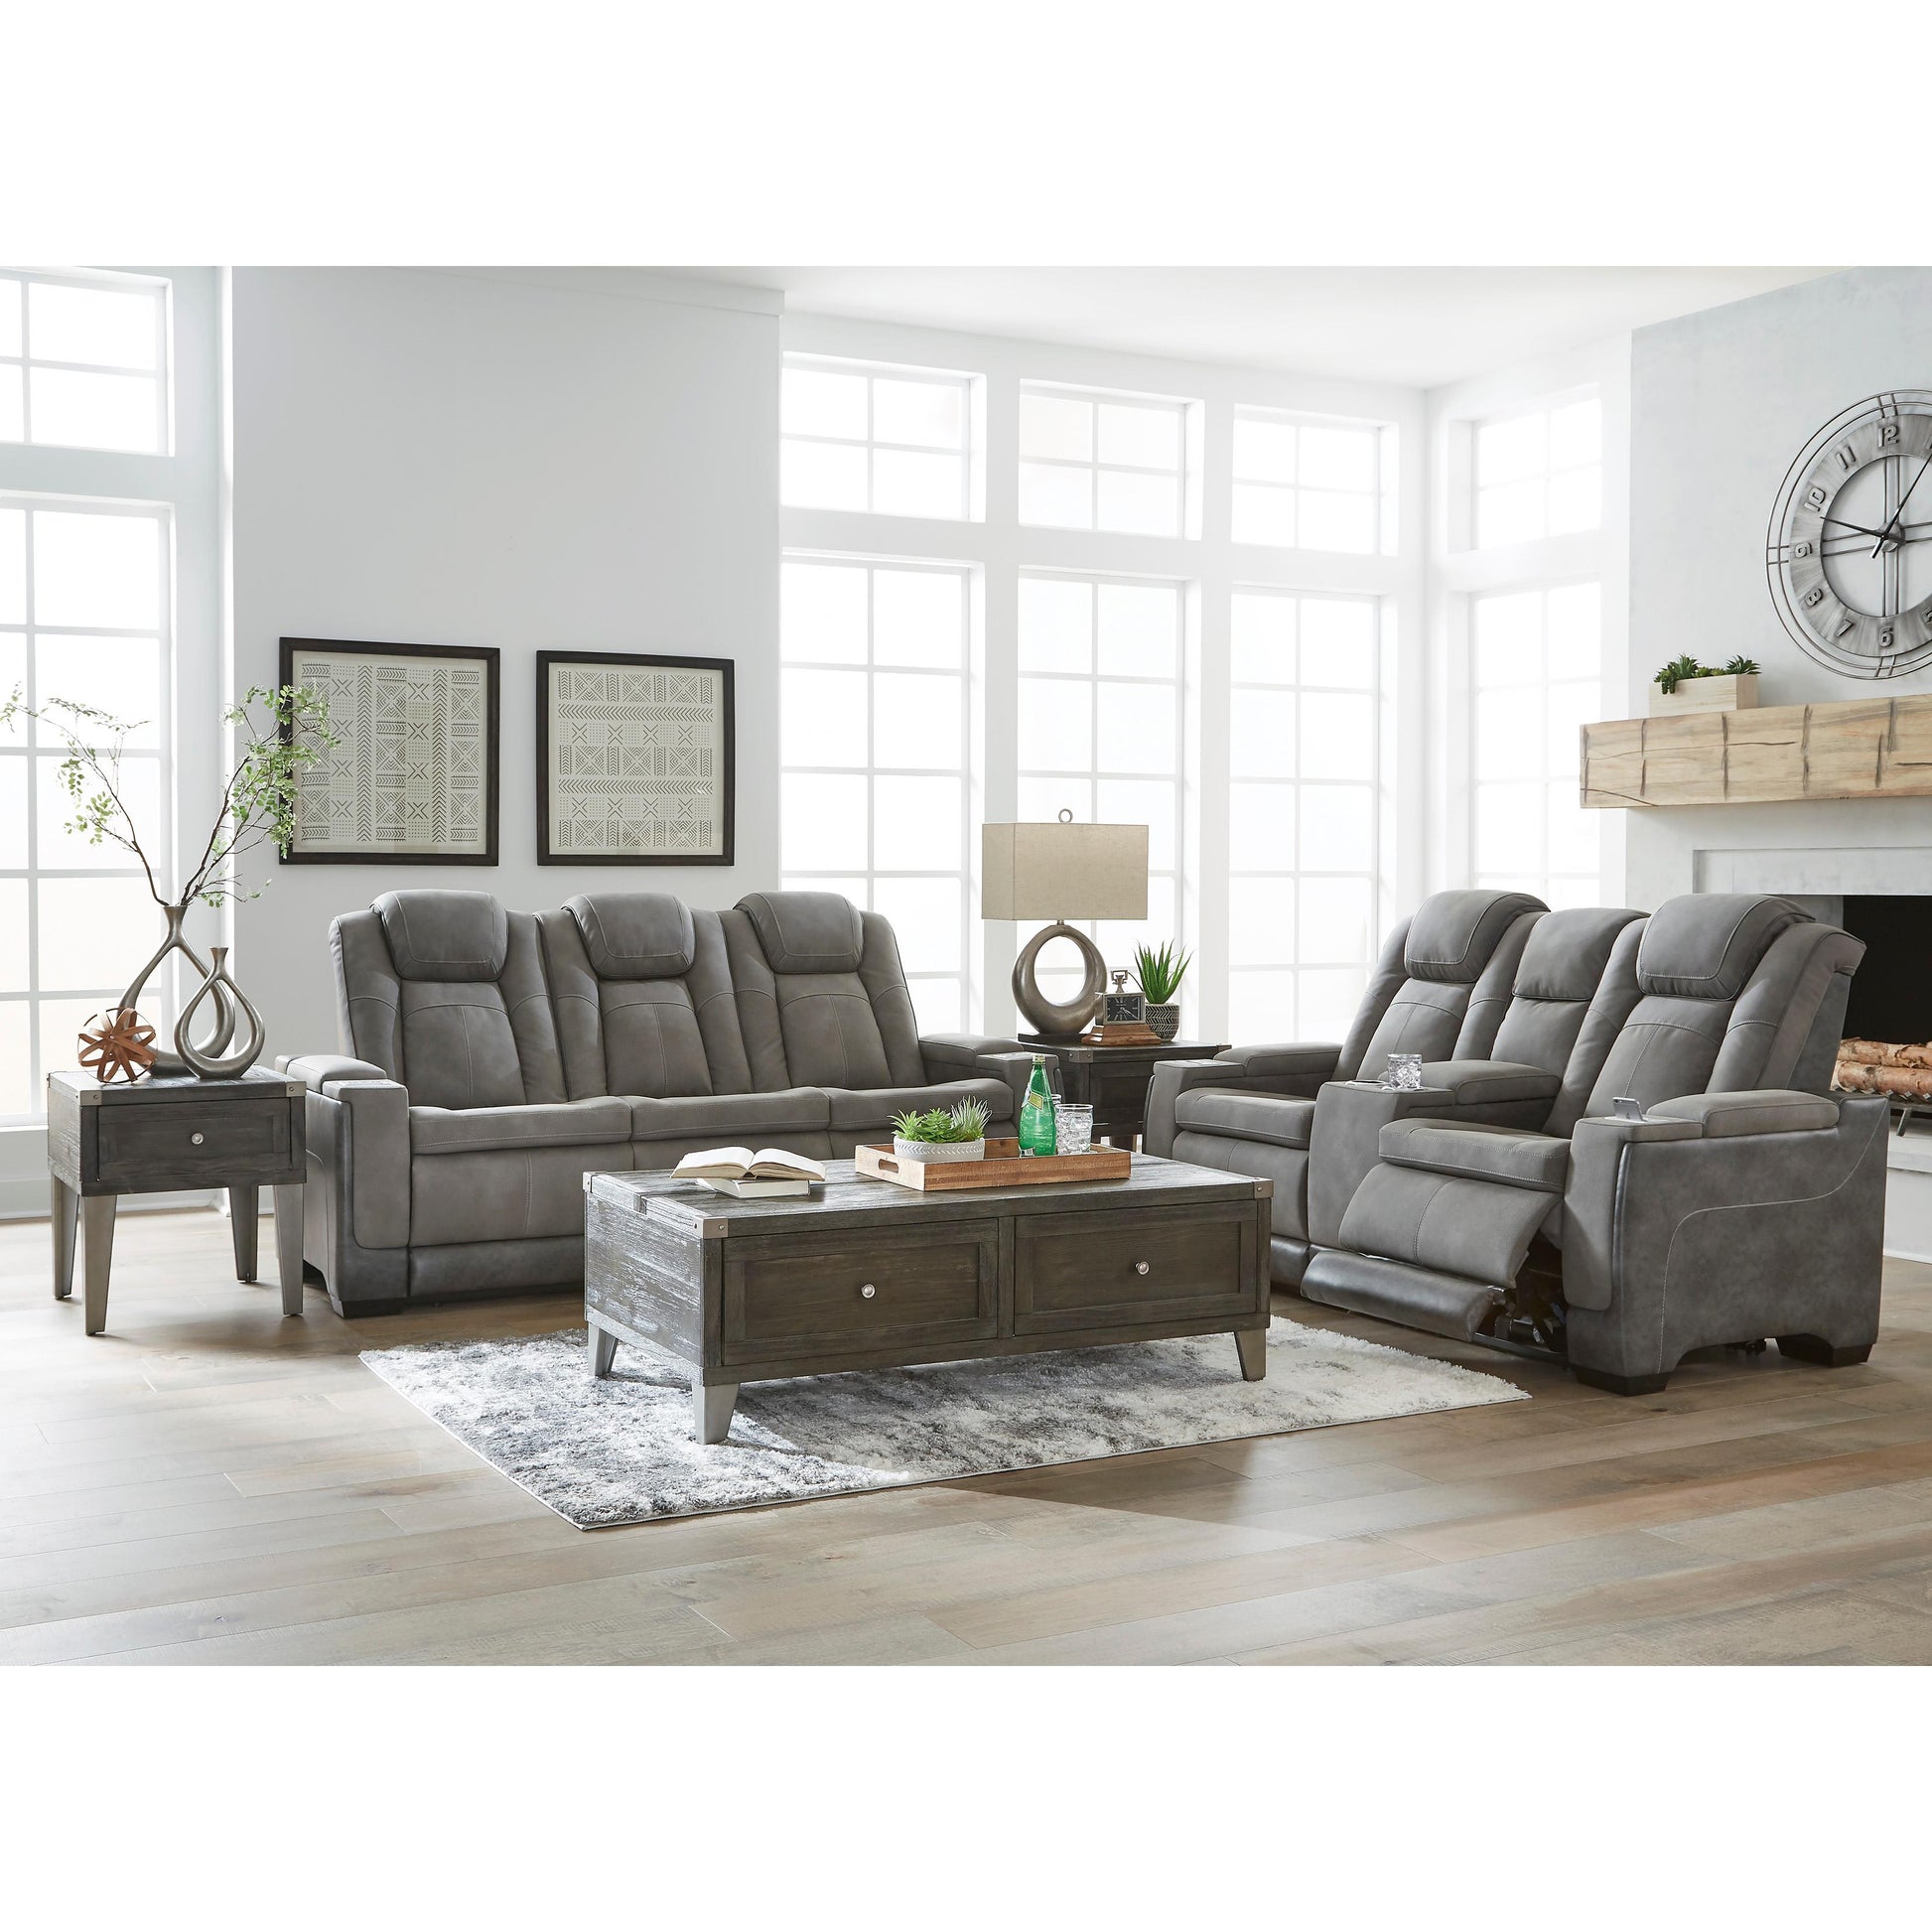 Signature Design by Ashley Next-Gen Durapella 22004 2 pc Power Reclining Living Room Set IMAGE 1